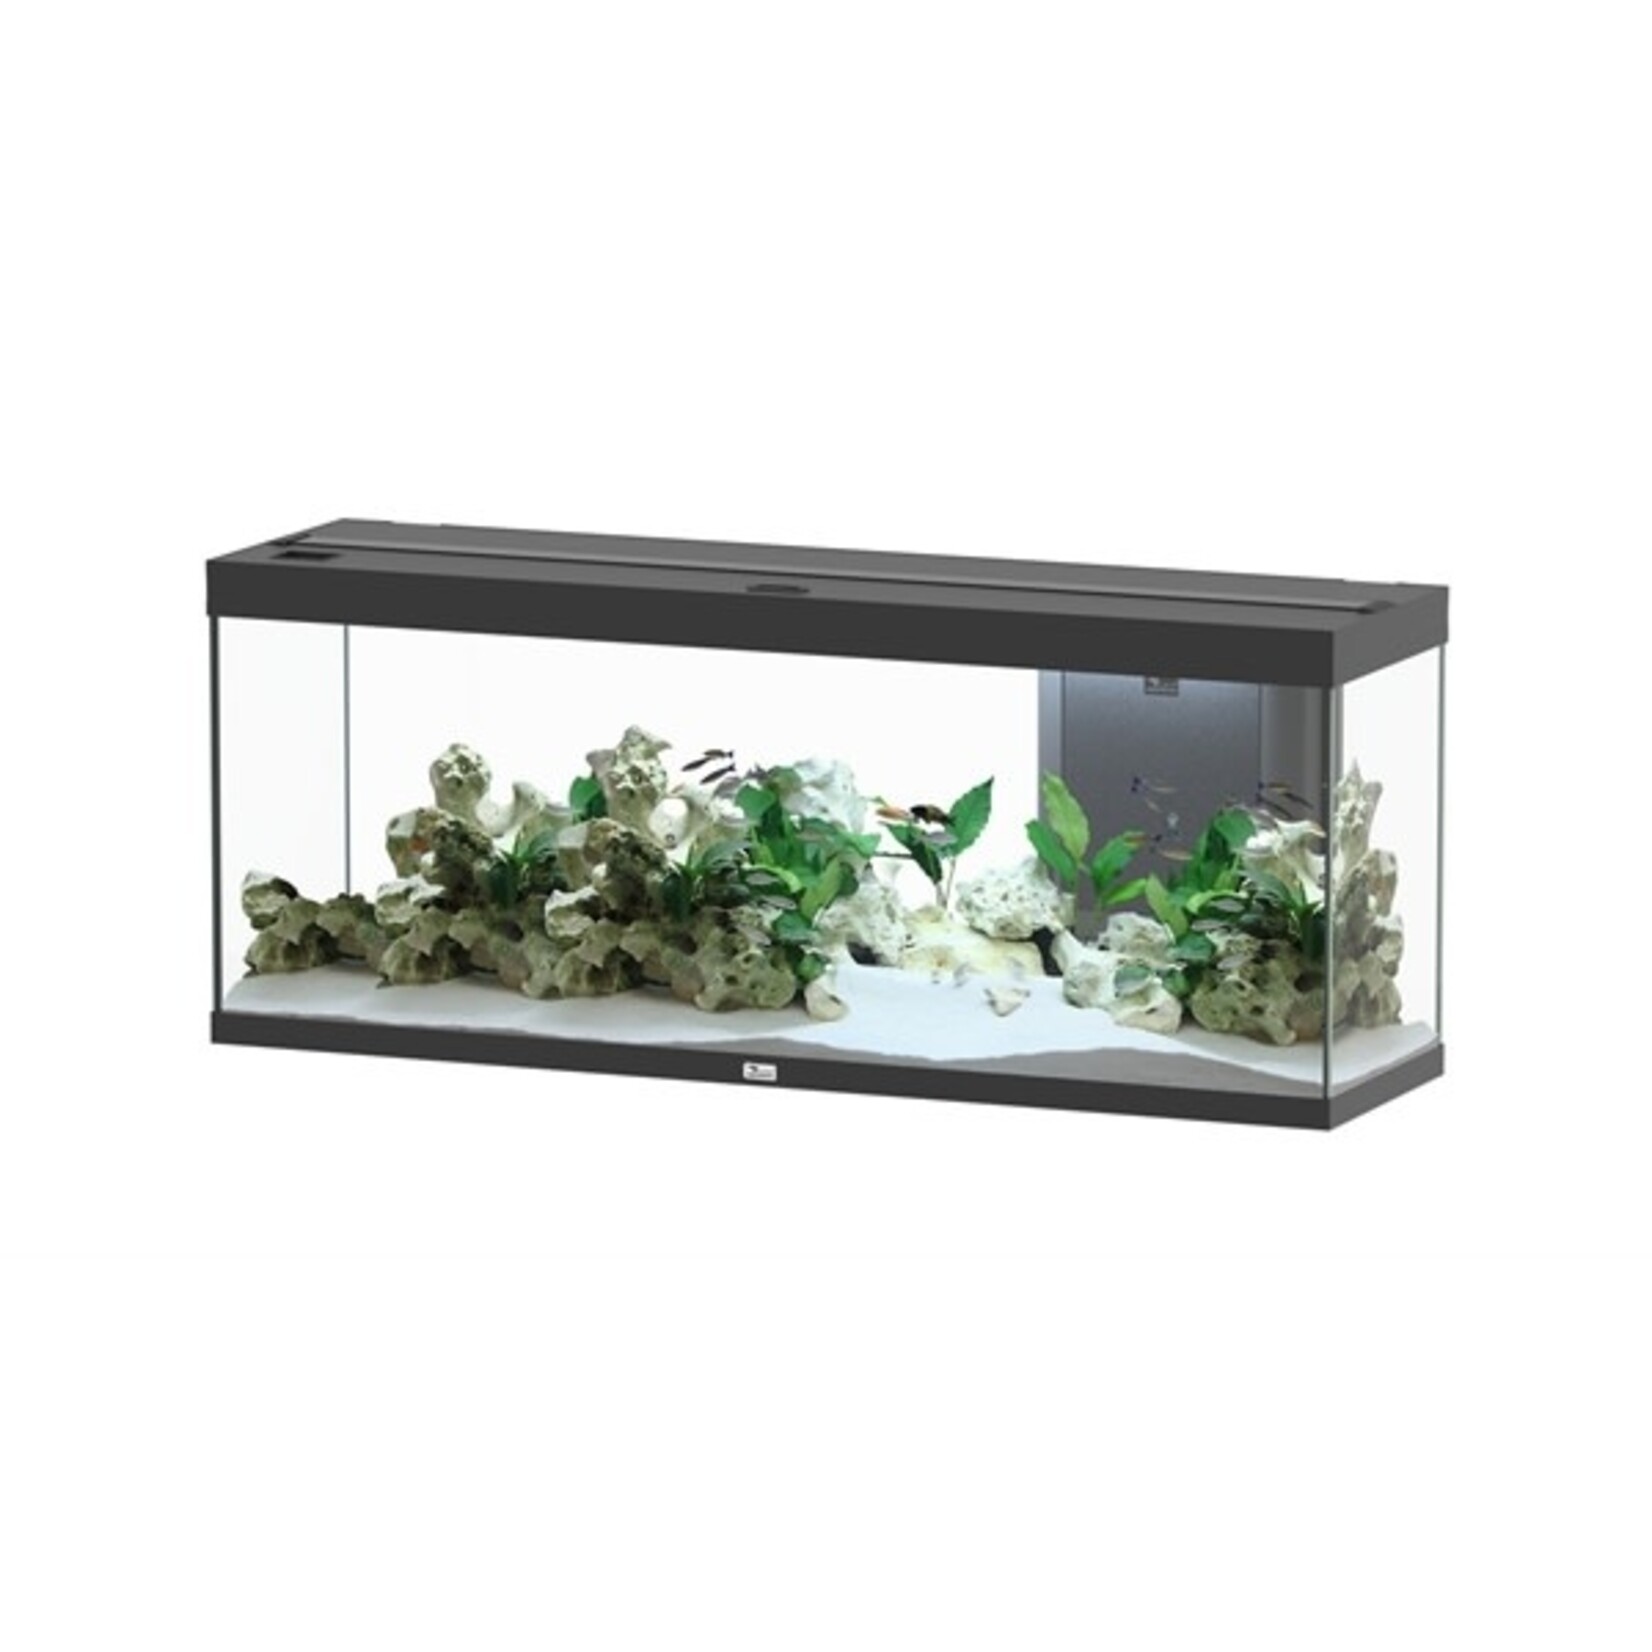 Aquatlantis Aquarium splendid 150 biobox zwart -001